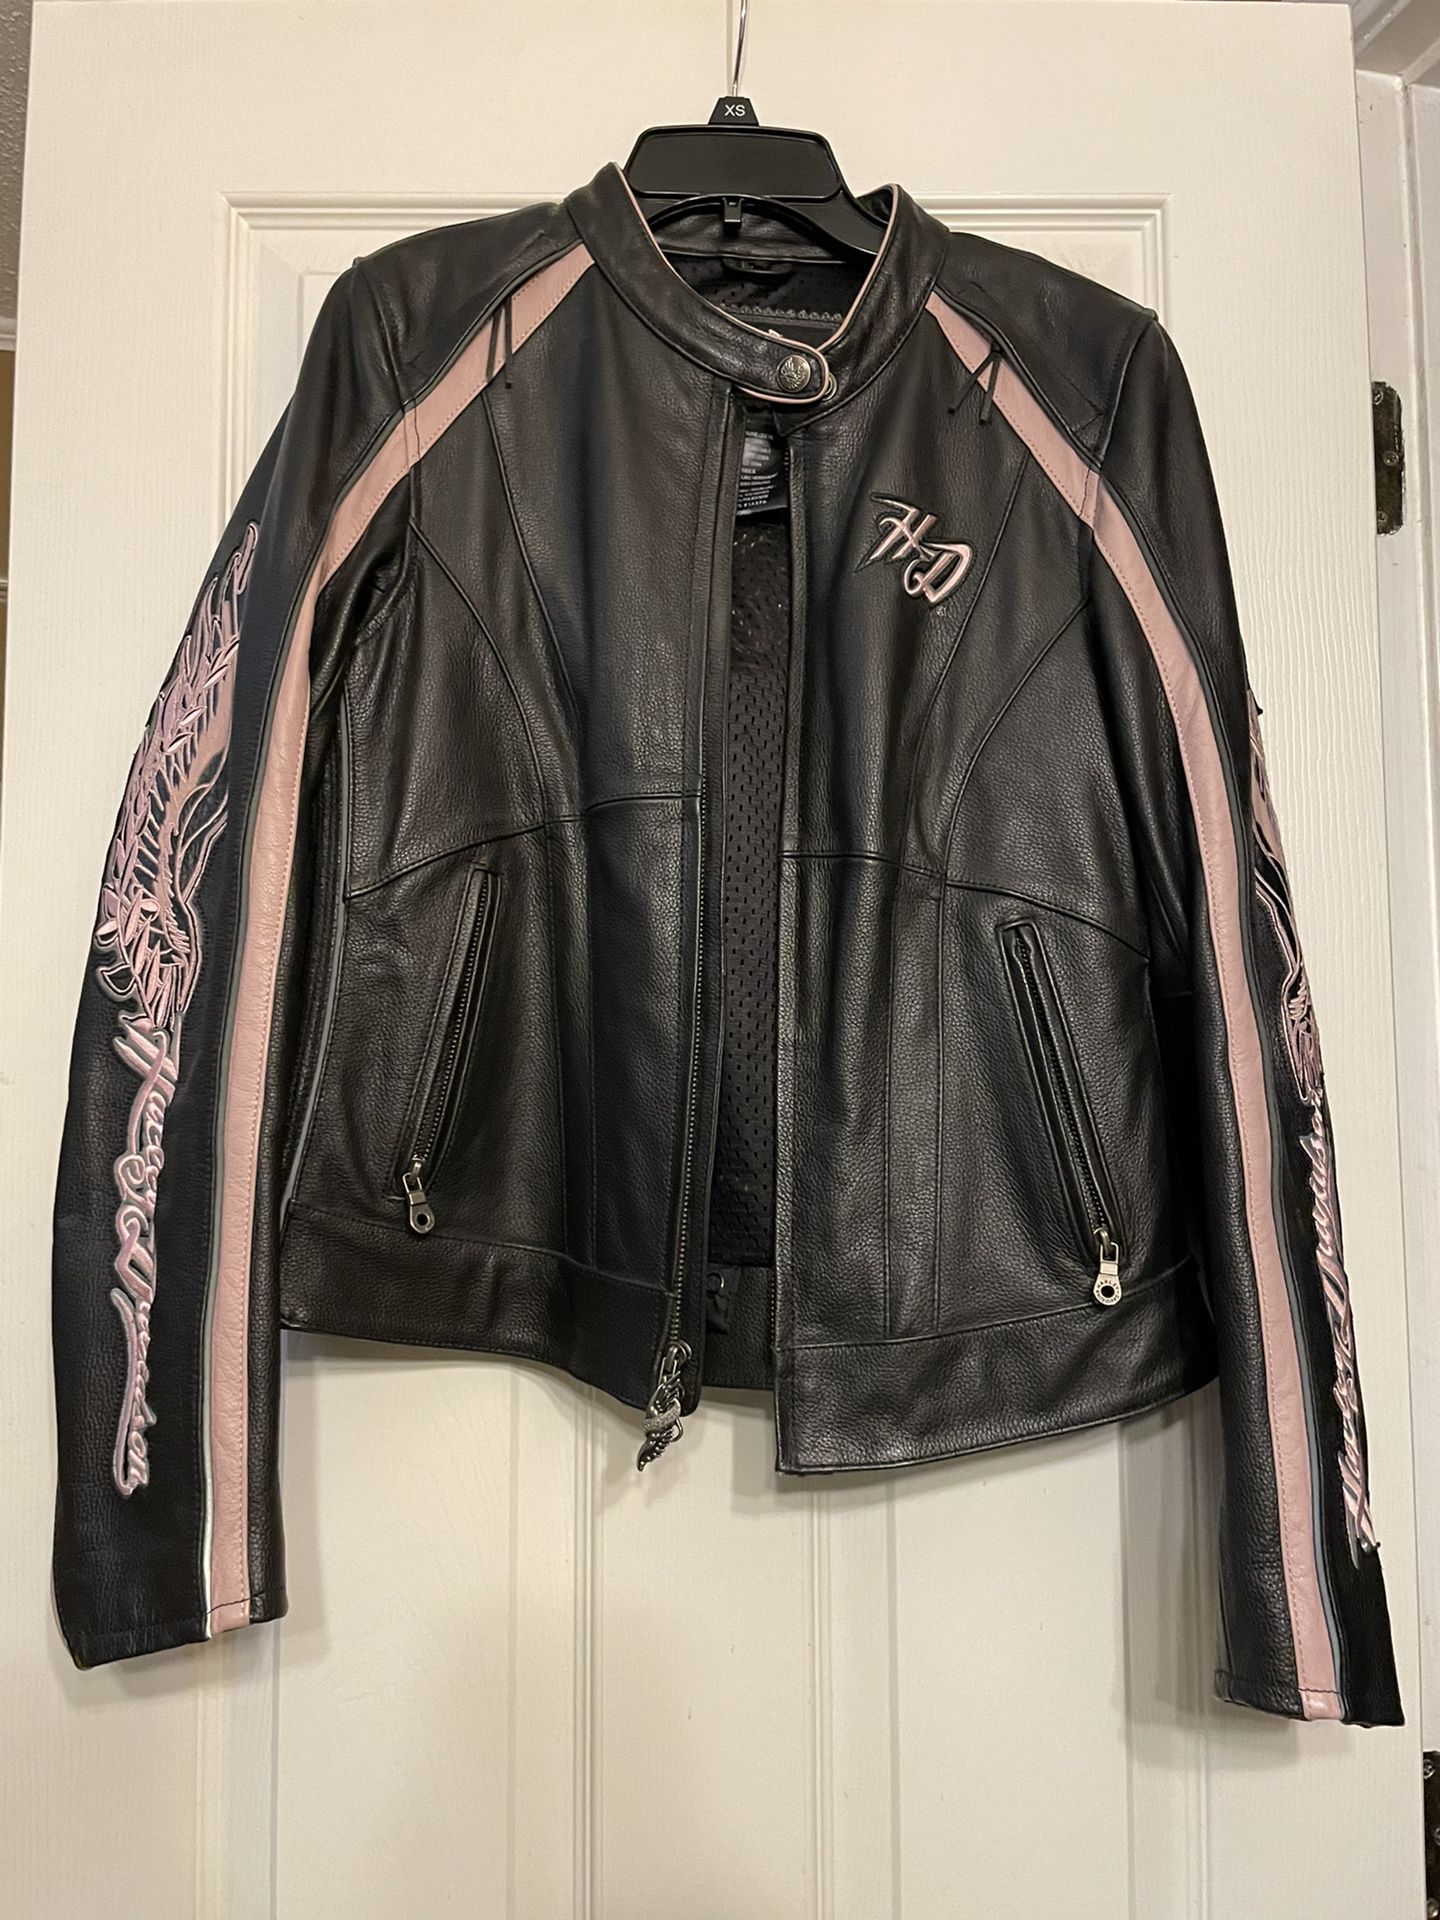 Women’s Harley Davidson leather jacket